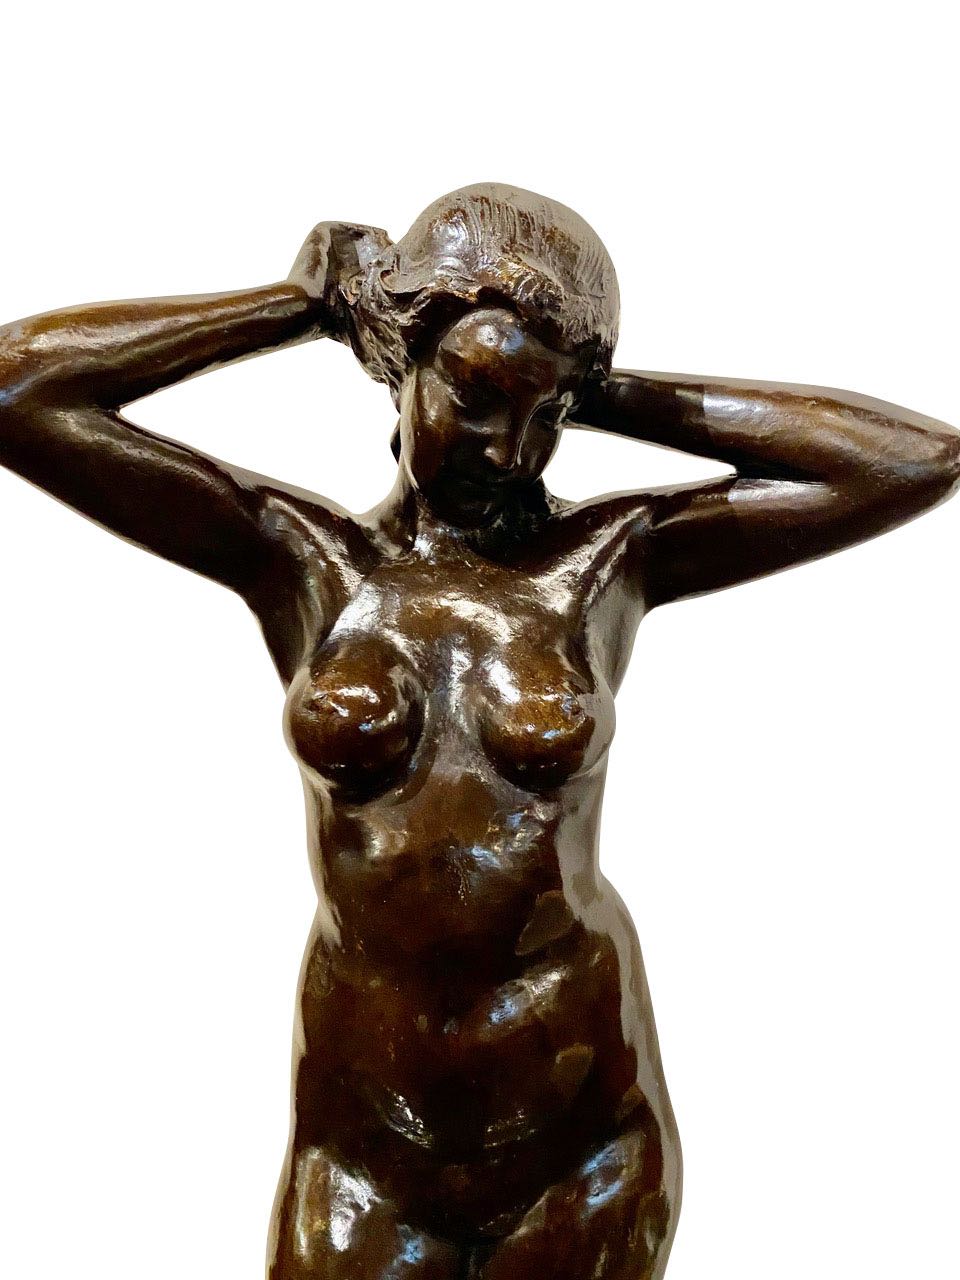 Art Deco Bronze Female Statue by Belgian Artist M. D'Haveloose